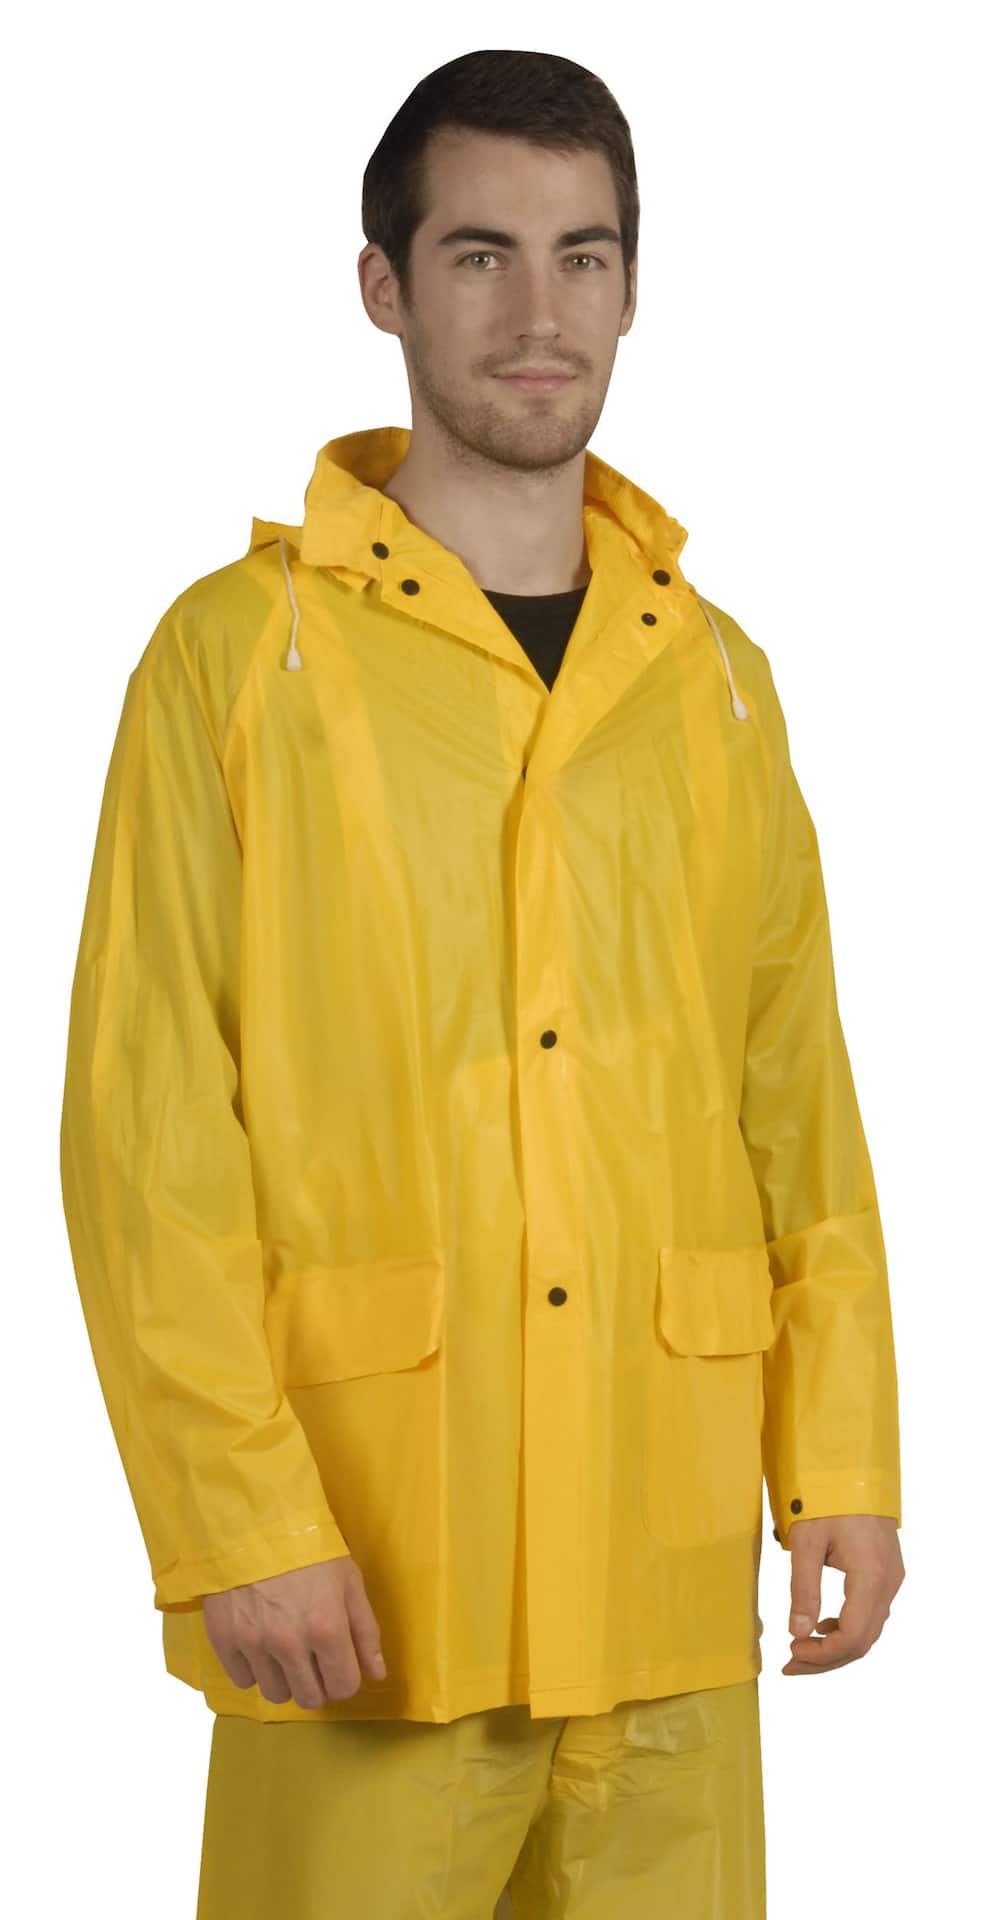 Adult Louisiana Professional Wear Waterproof Rain/Chemical Jacket Size XL